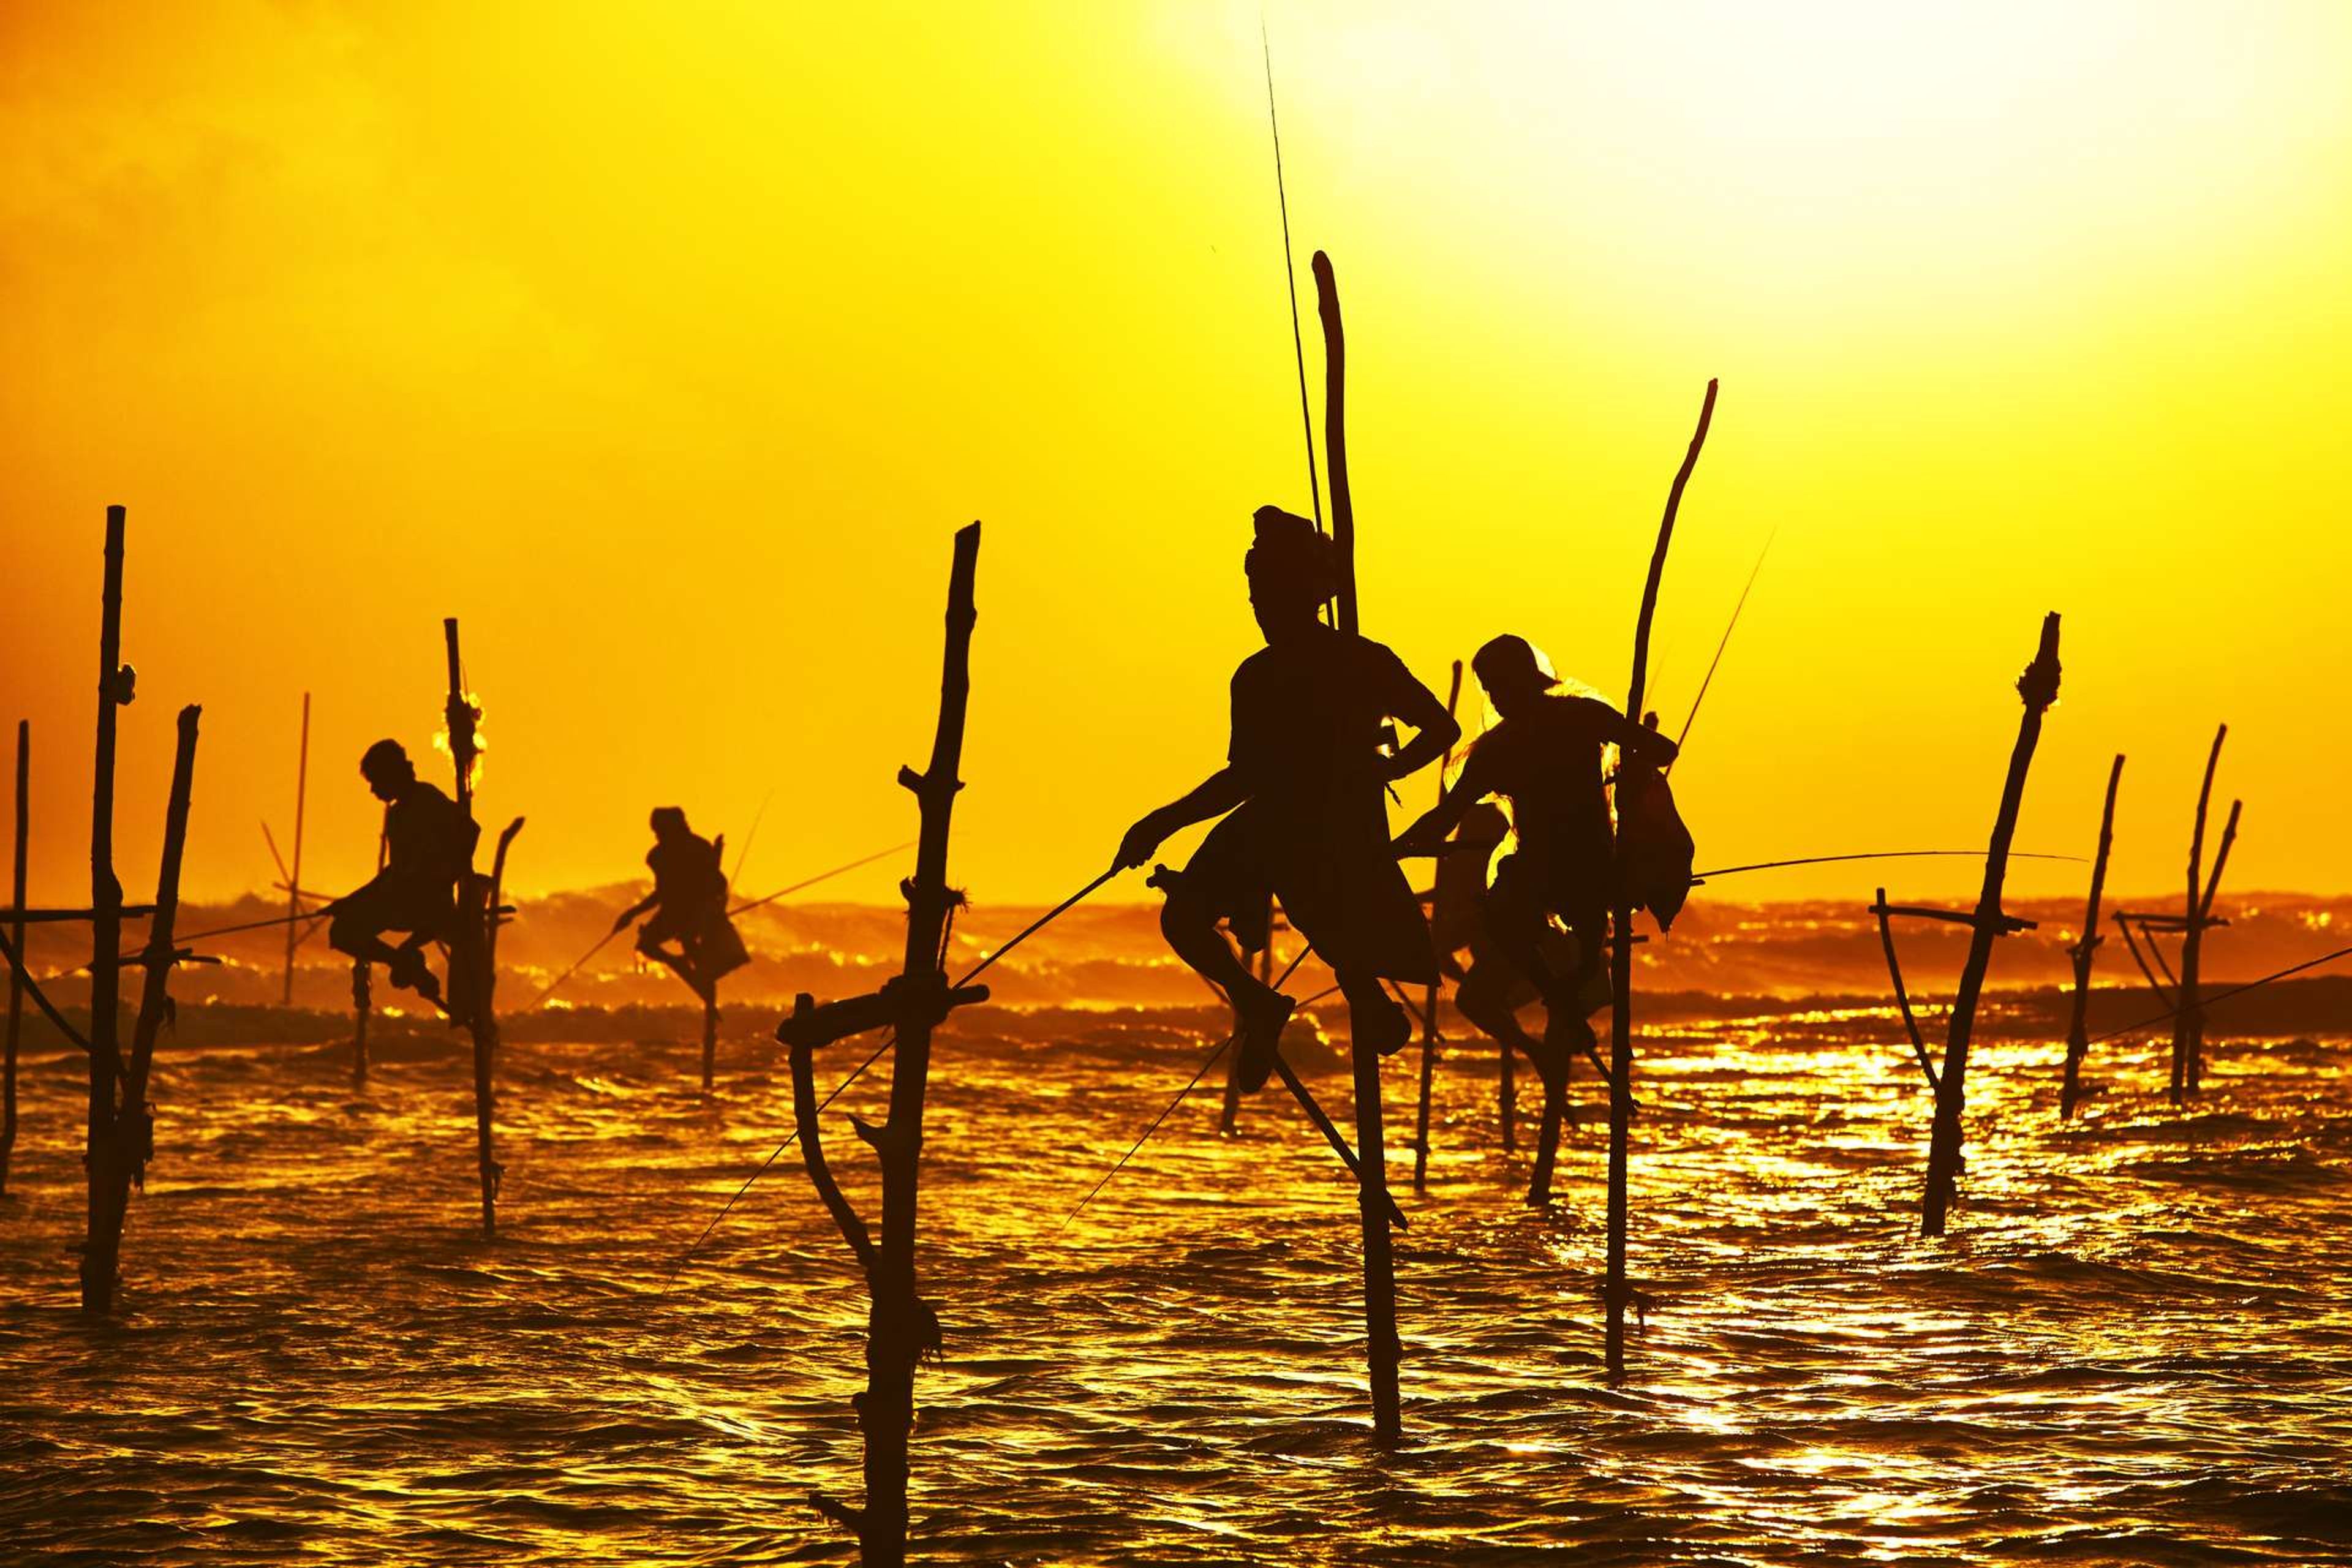 Sri Lanka Galle traditional fishermen at the sunset